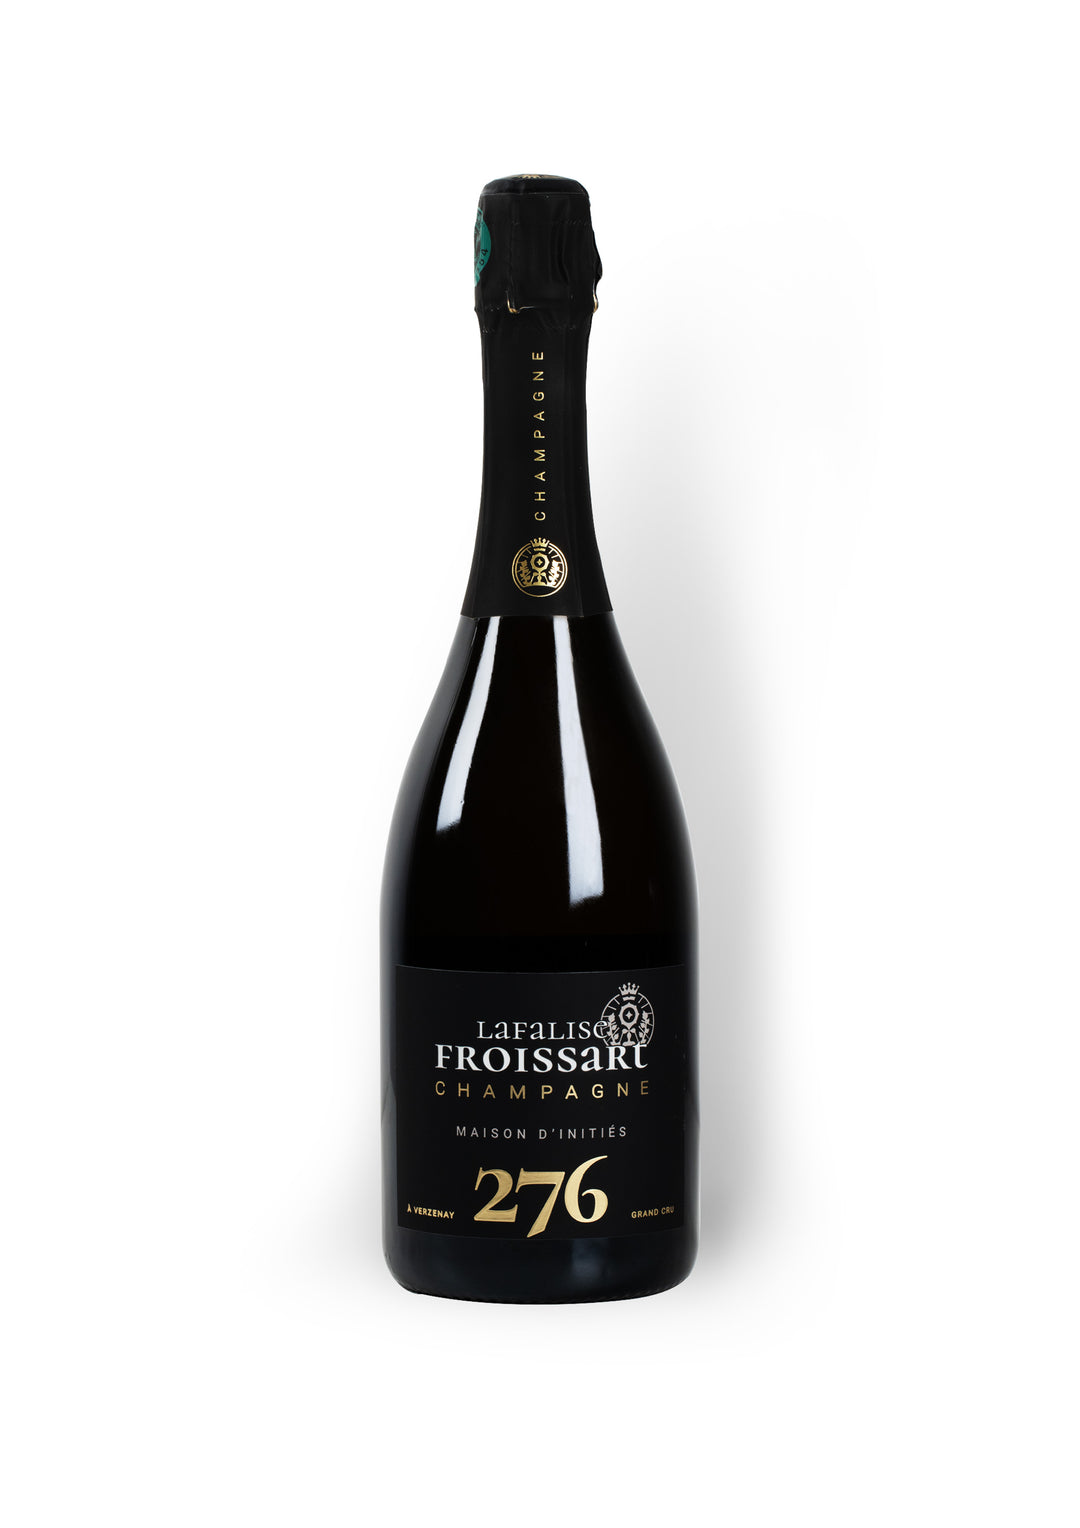 Champagne Lafalise-Froissart Brut Nature "276" NM